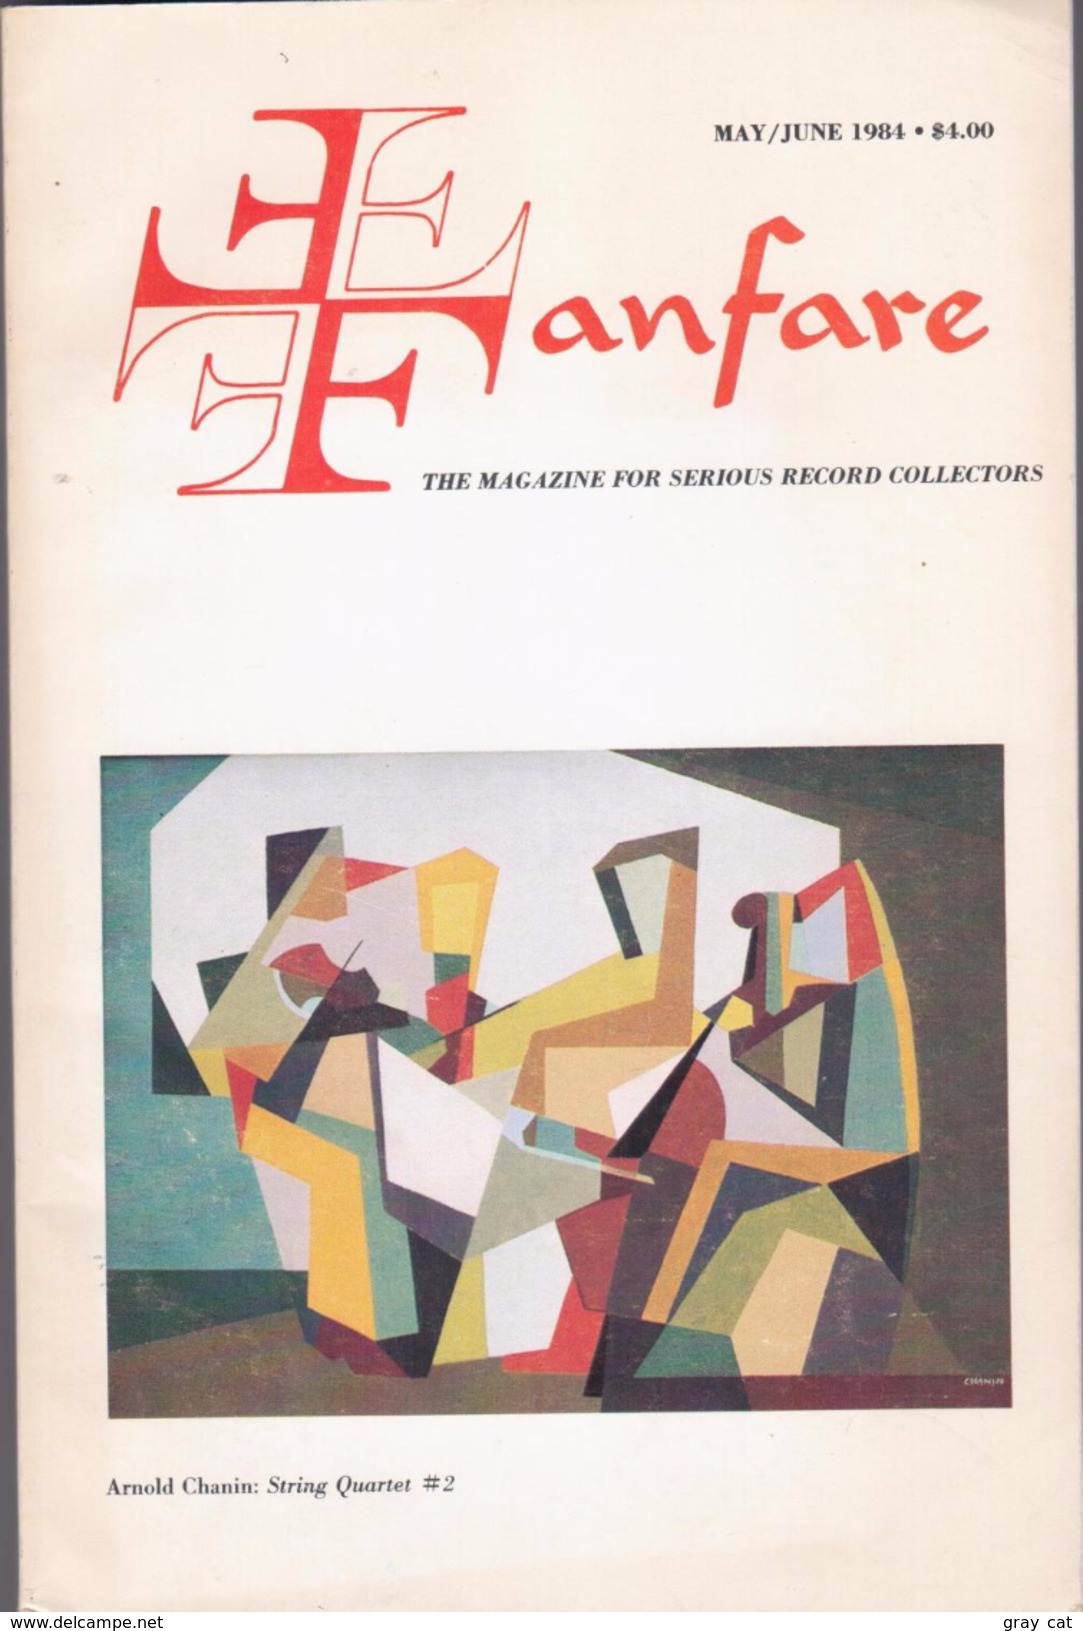 Fanfare, The Magazine For Serious Record Collectors, Vol. 7, No. 5, May/June 1984 - Unterhaltung